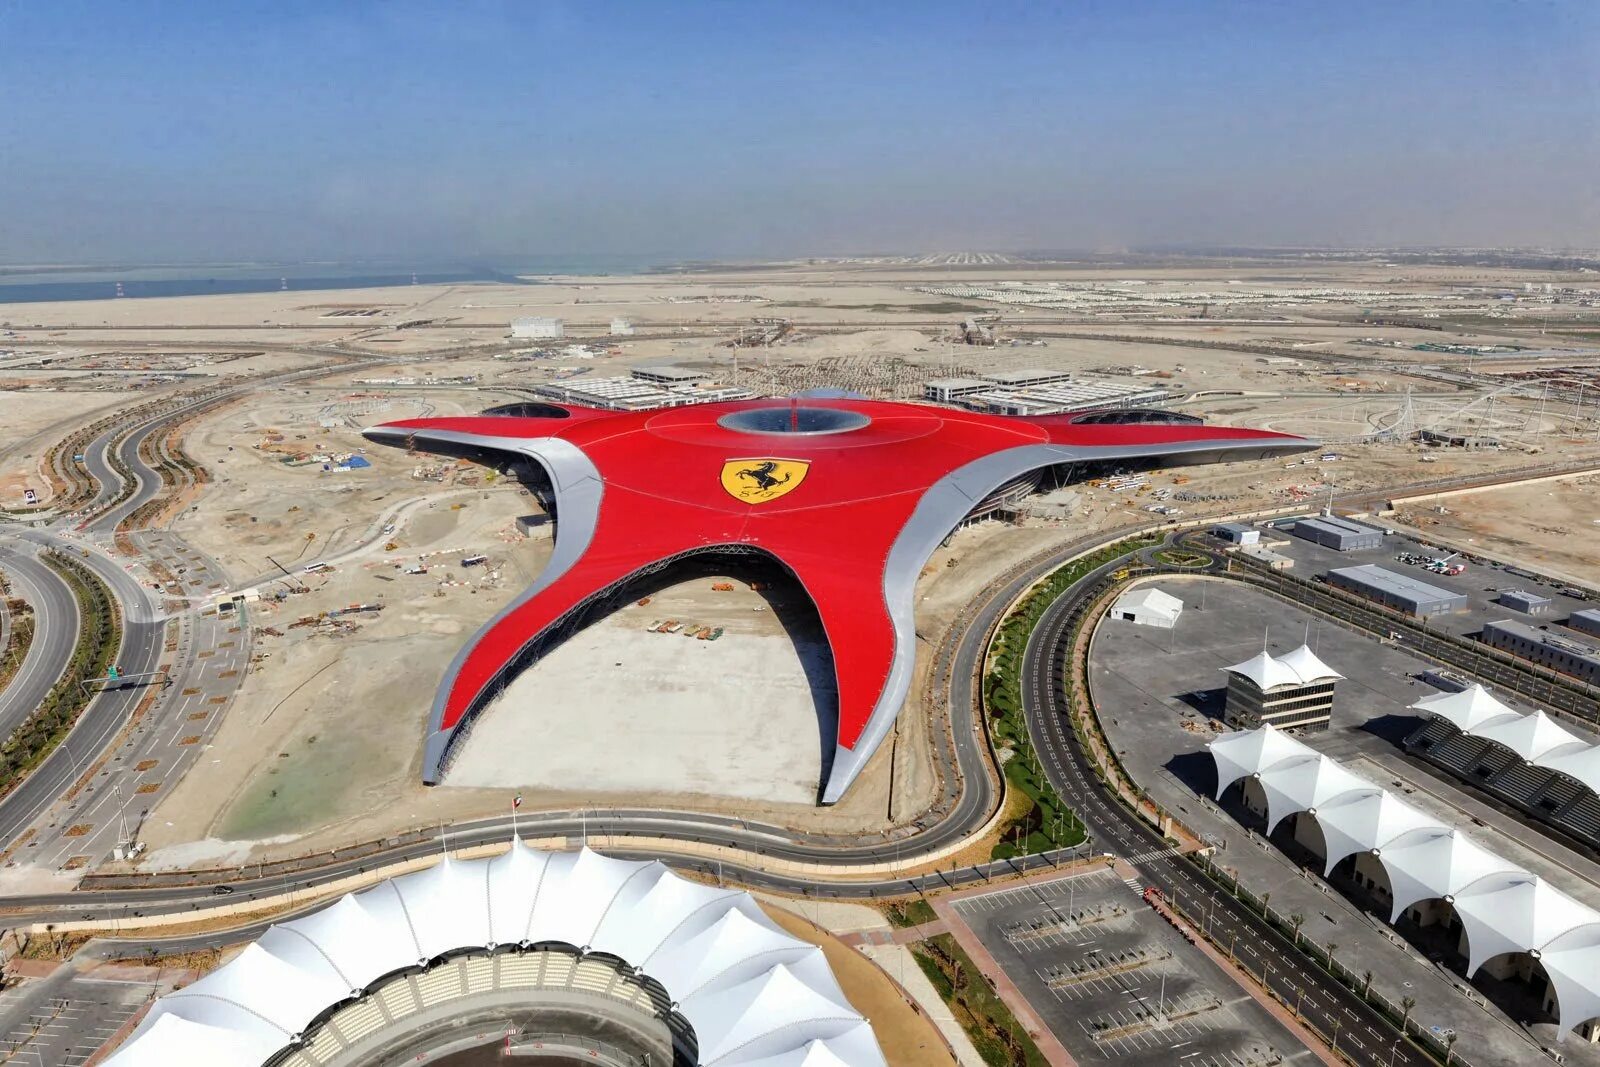 Парк феррари в дубае. Ferrari World Абу-Даби. Феррари парк Дубай. Ferrari парк в Абу Даби. Феррари парк Абу Даби в Дубае.